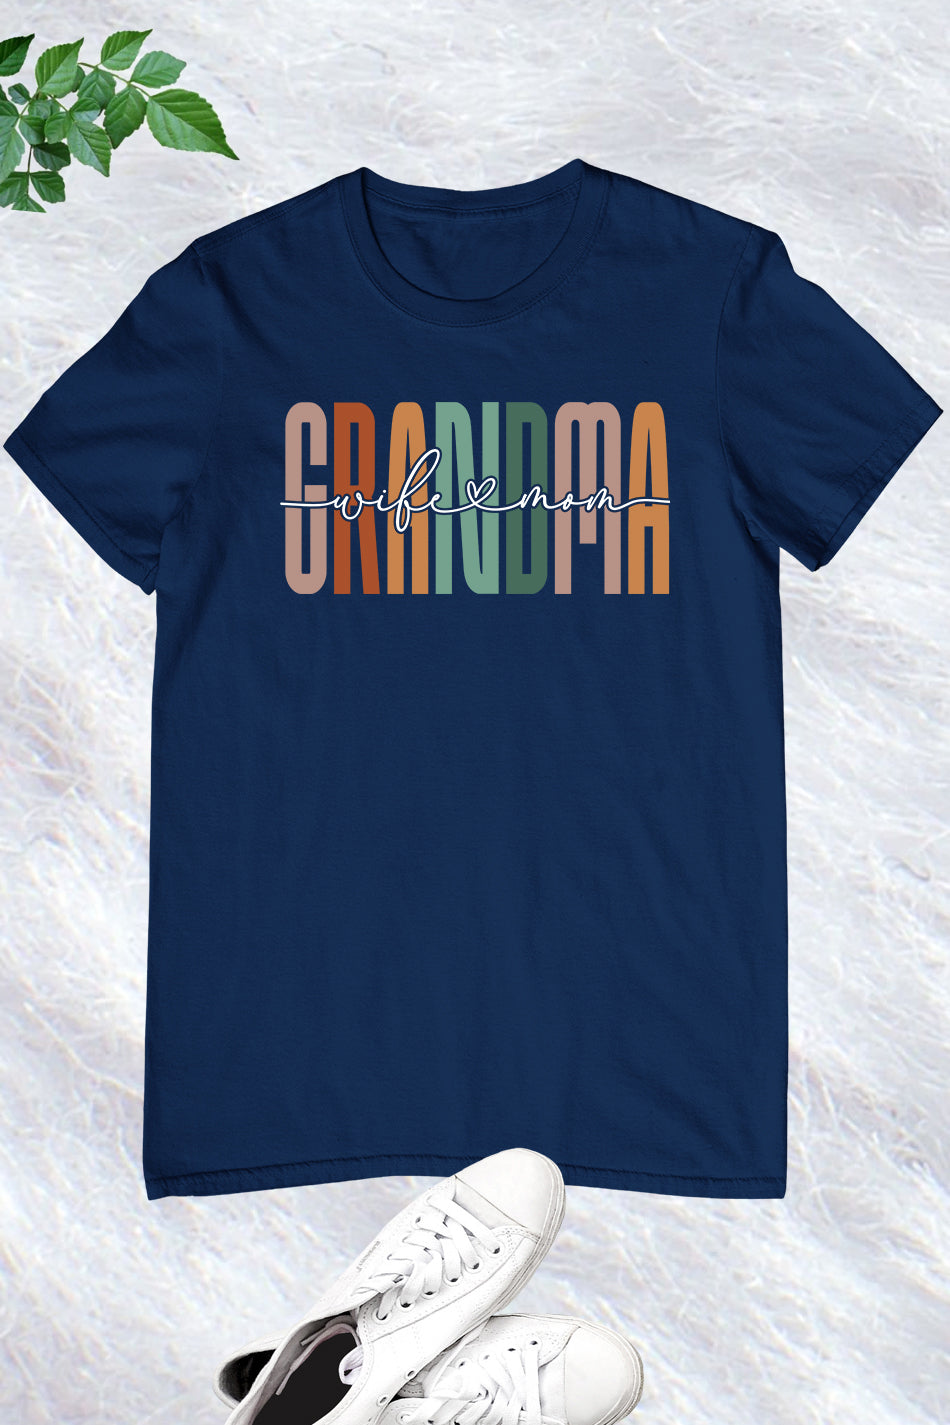 Grandma Wife and Mom Shirt